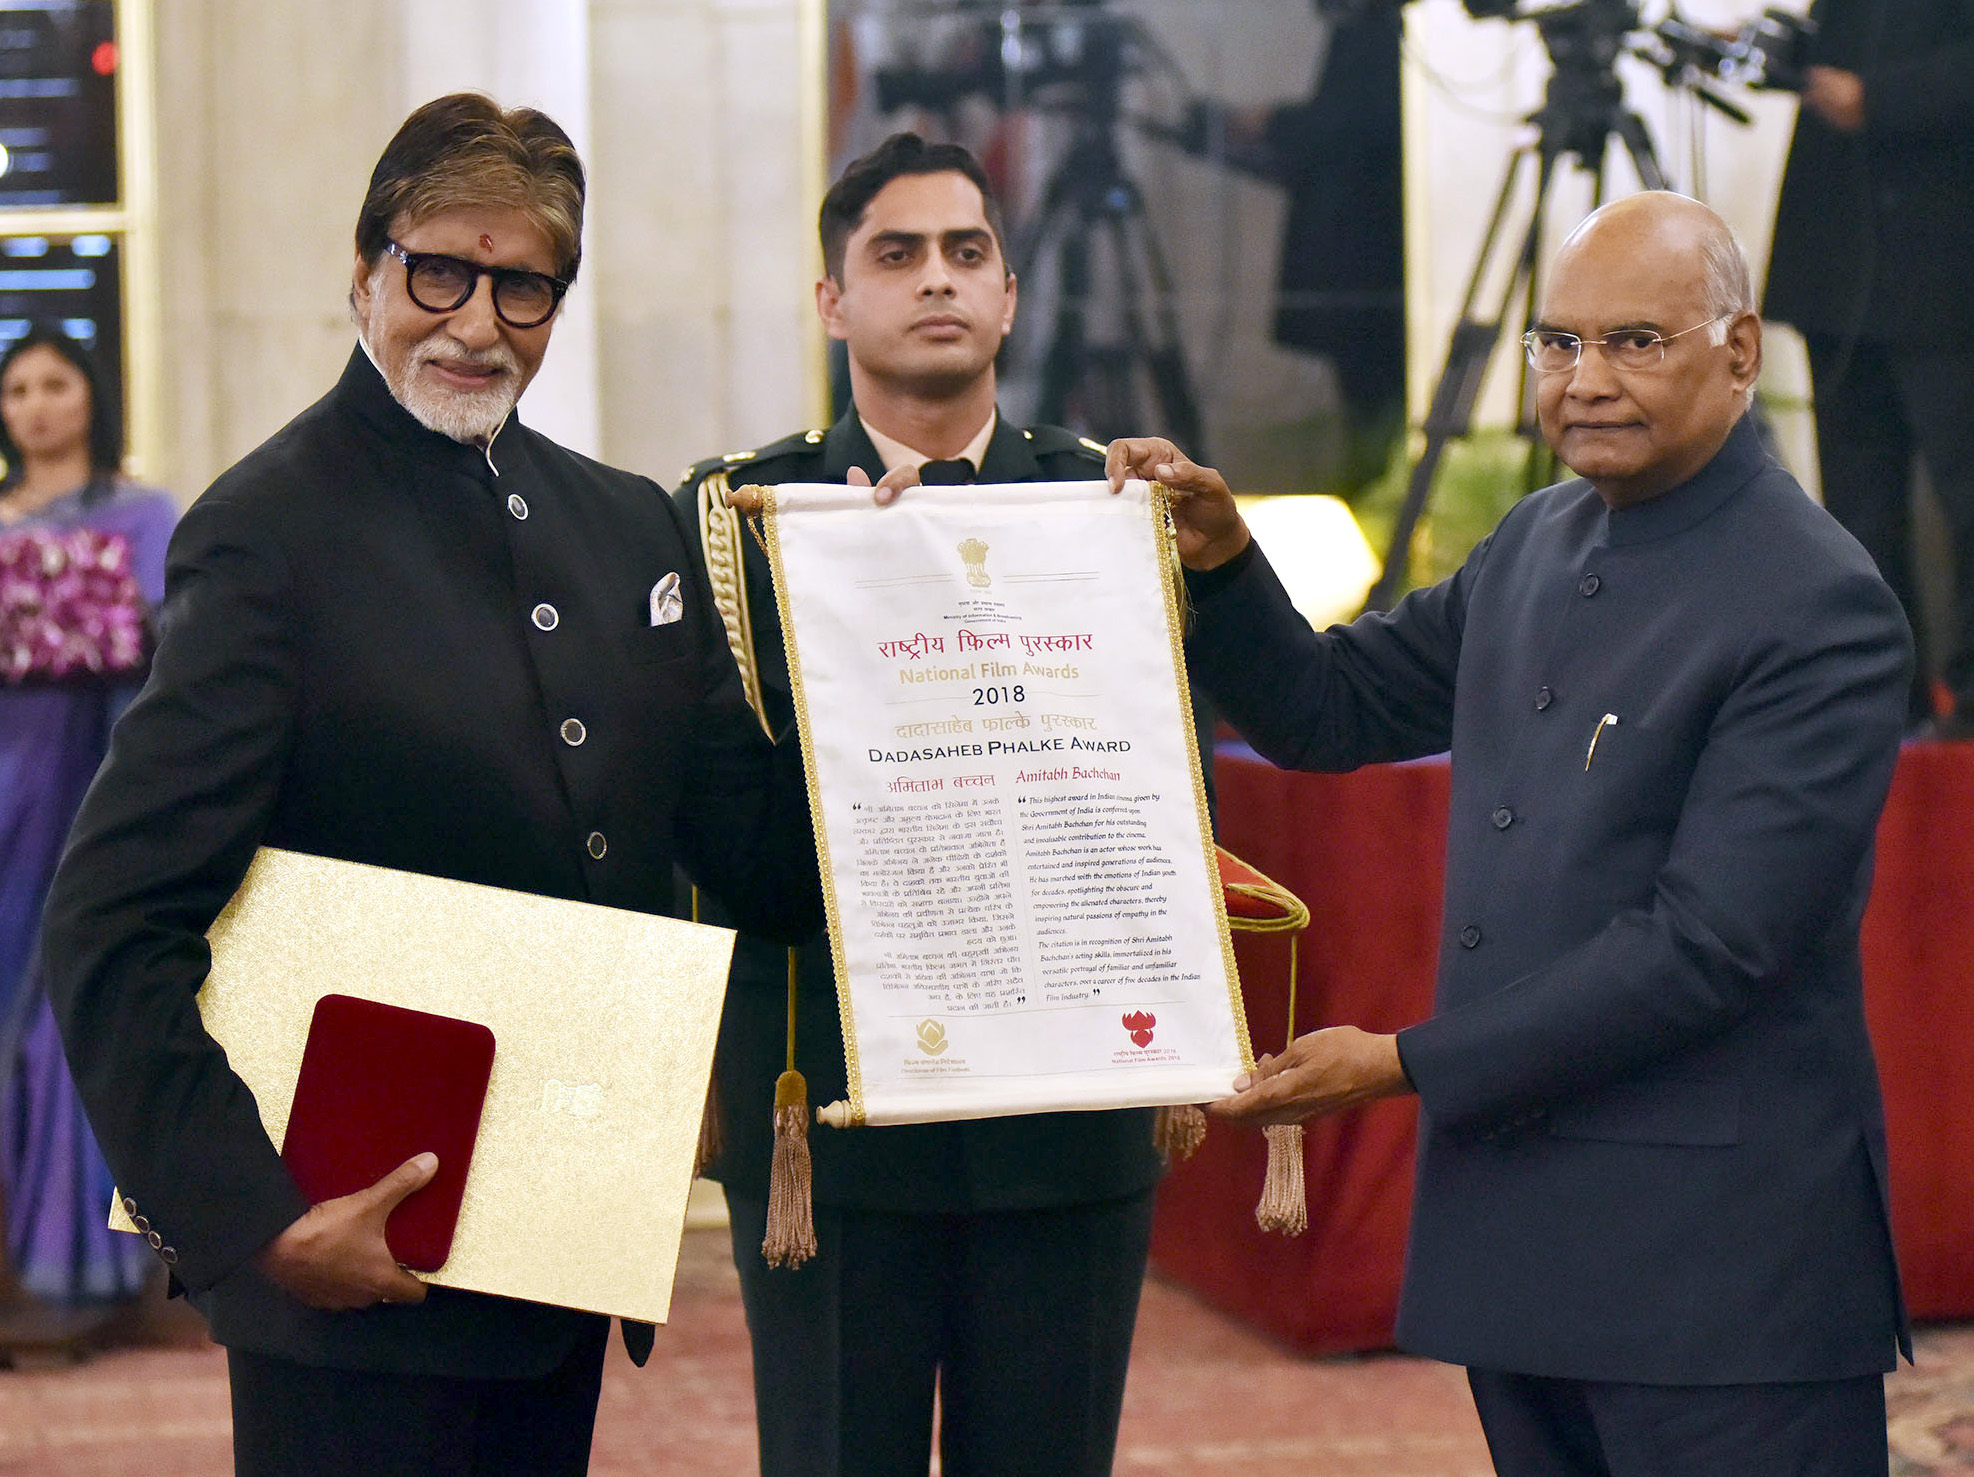 Amitabh Bachchan honoured with Dadasaheb Phalke Award